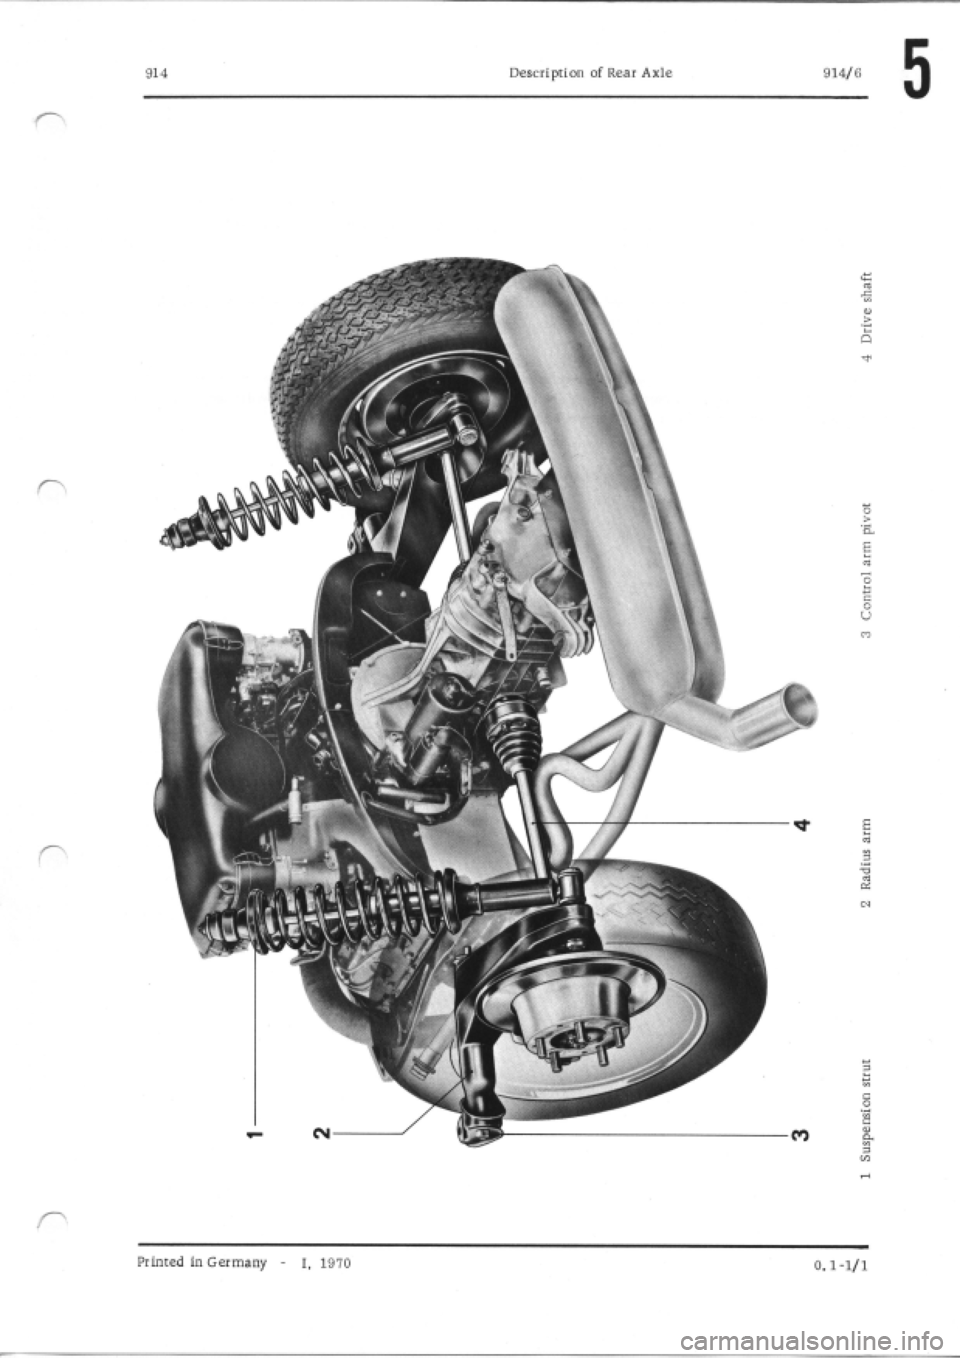 PORSCHE 914 1973 1.G Rear Axle Workshop Manual 